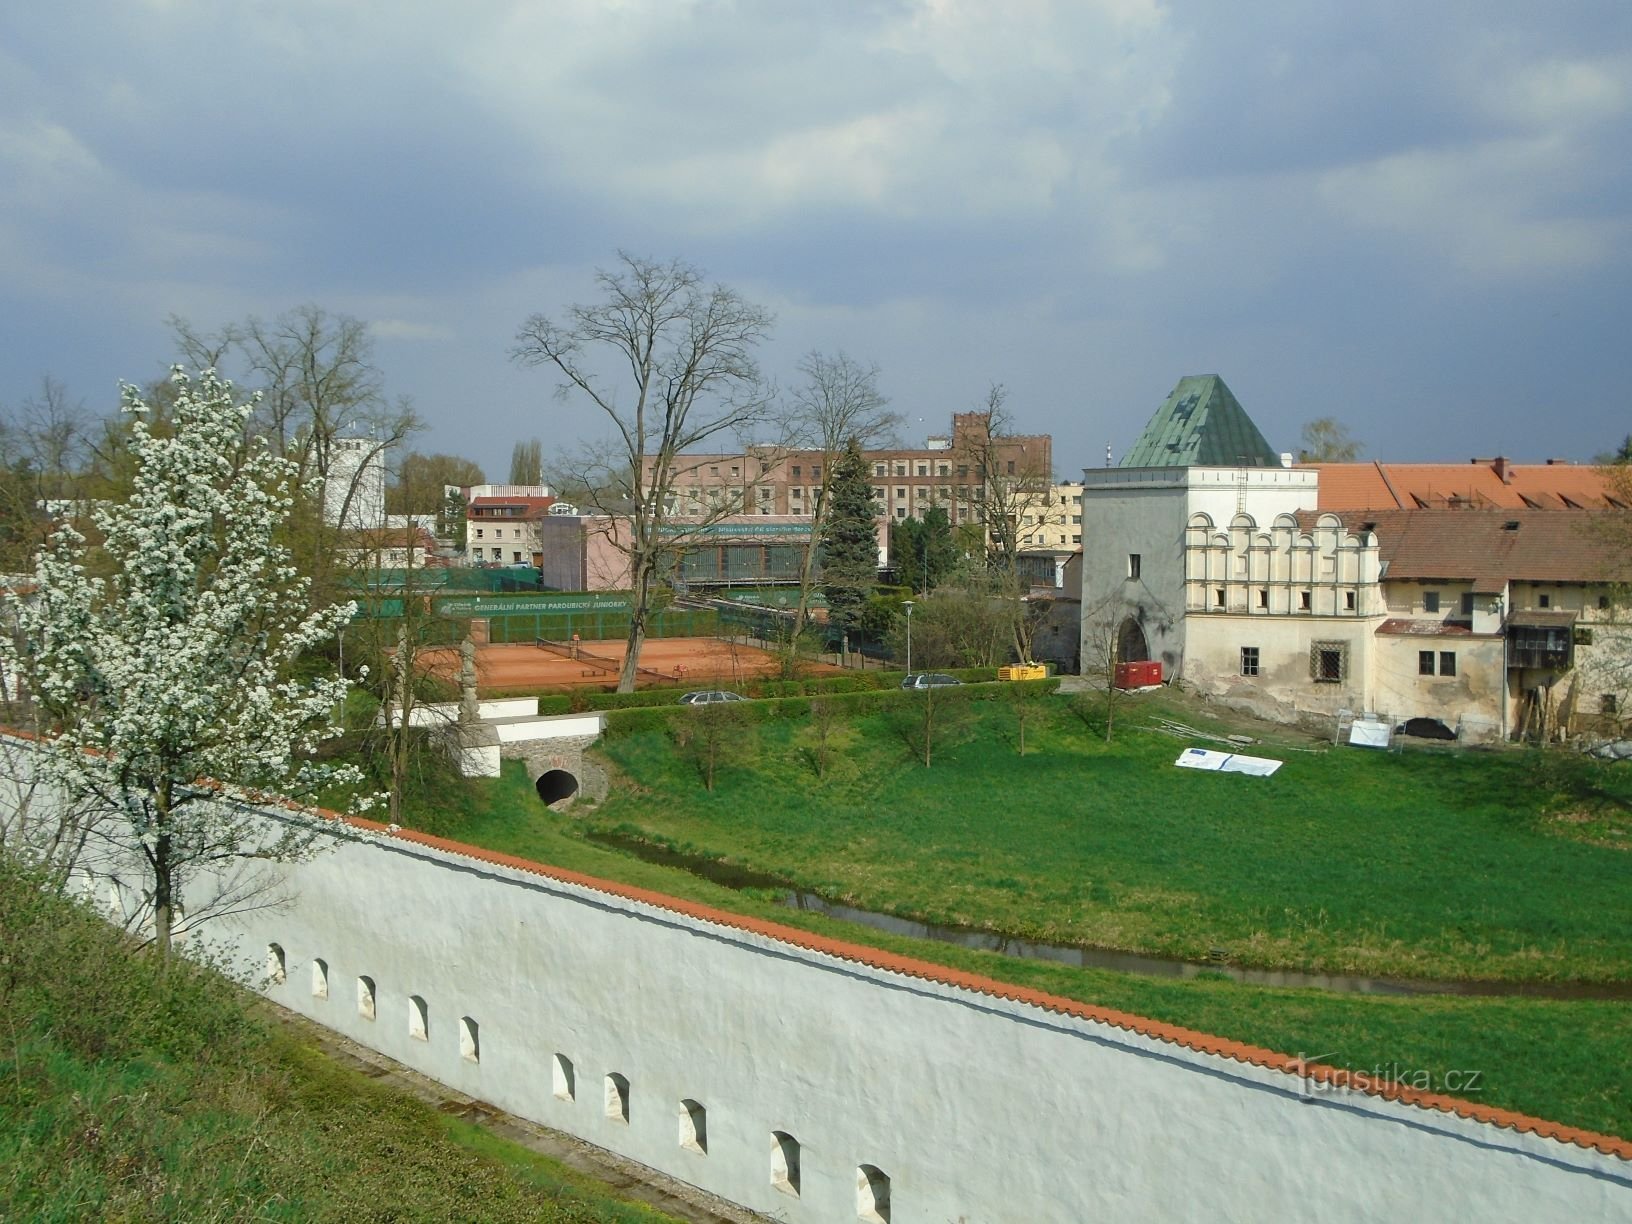 Pogled na most med gradom in Příhrádekom (Pardubice, 17.4.2018. XNUMX. XNUMX)